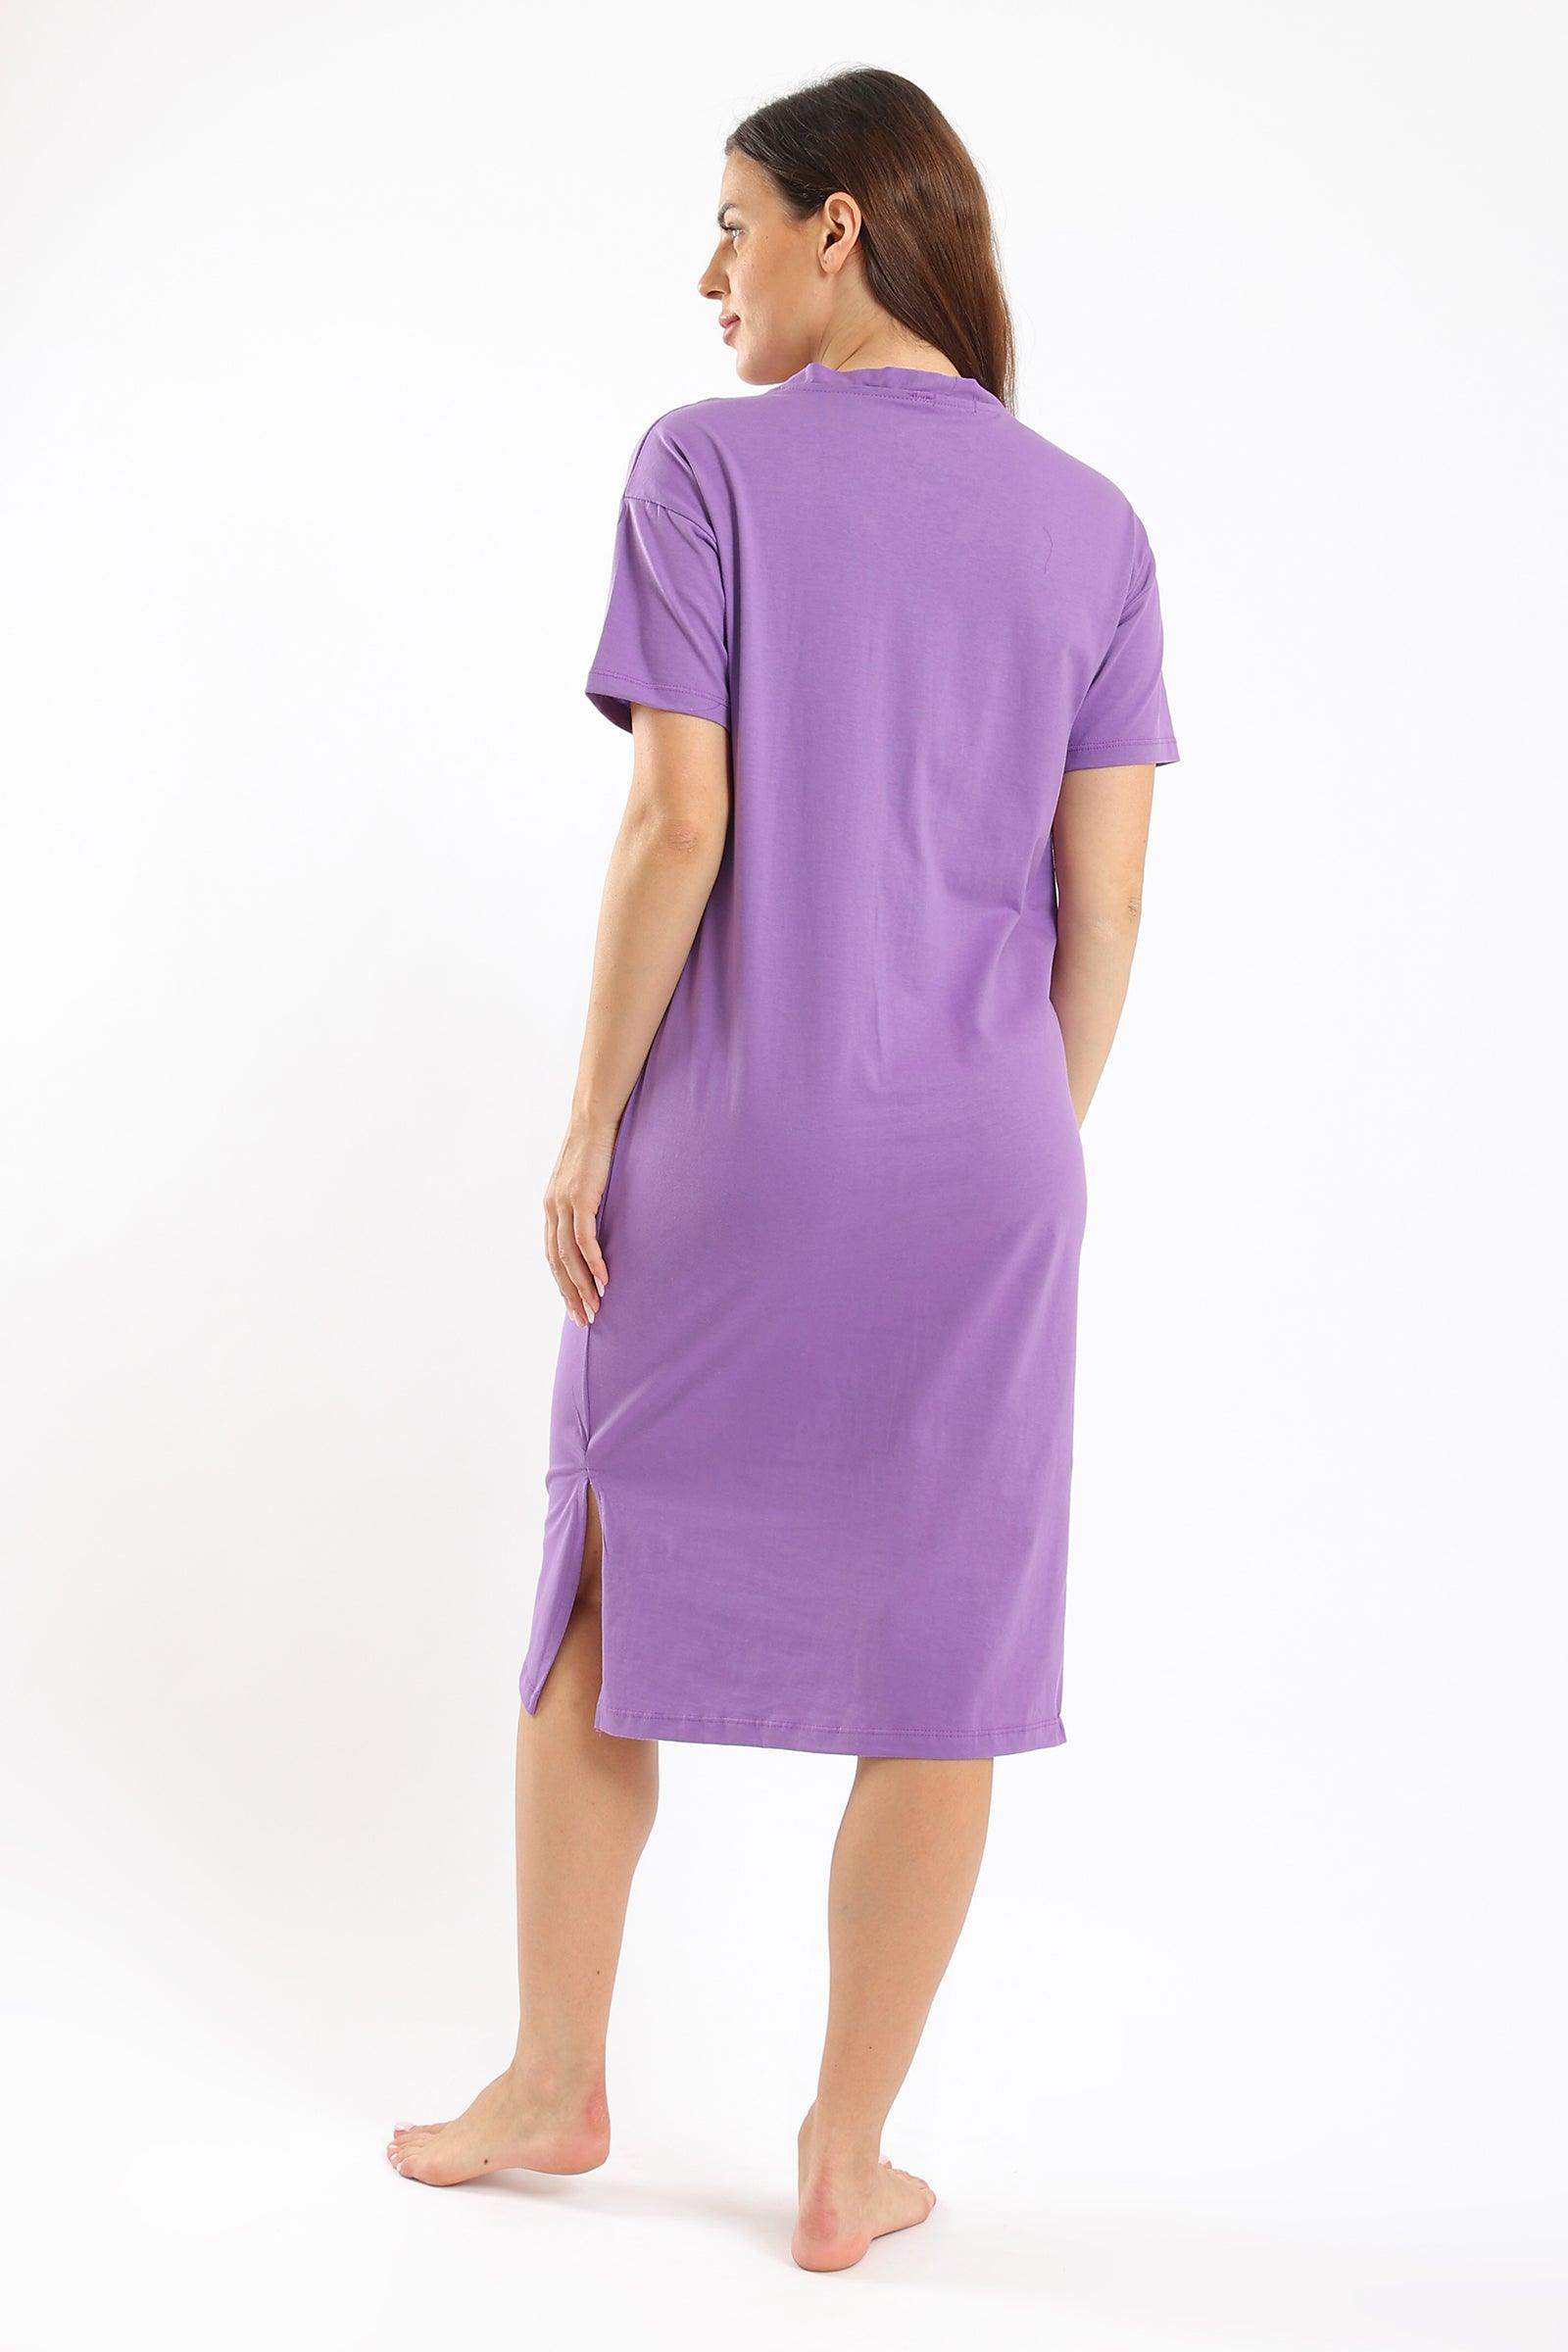 Purple V-Neck Dress - Carina - كارينا